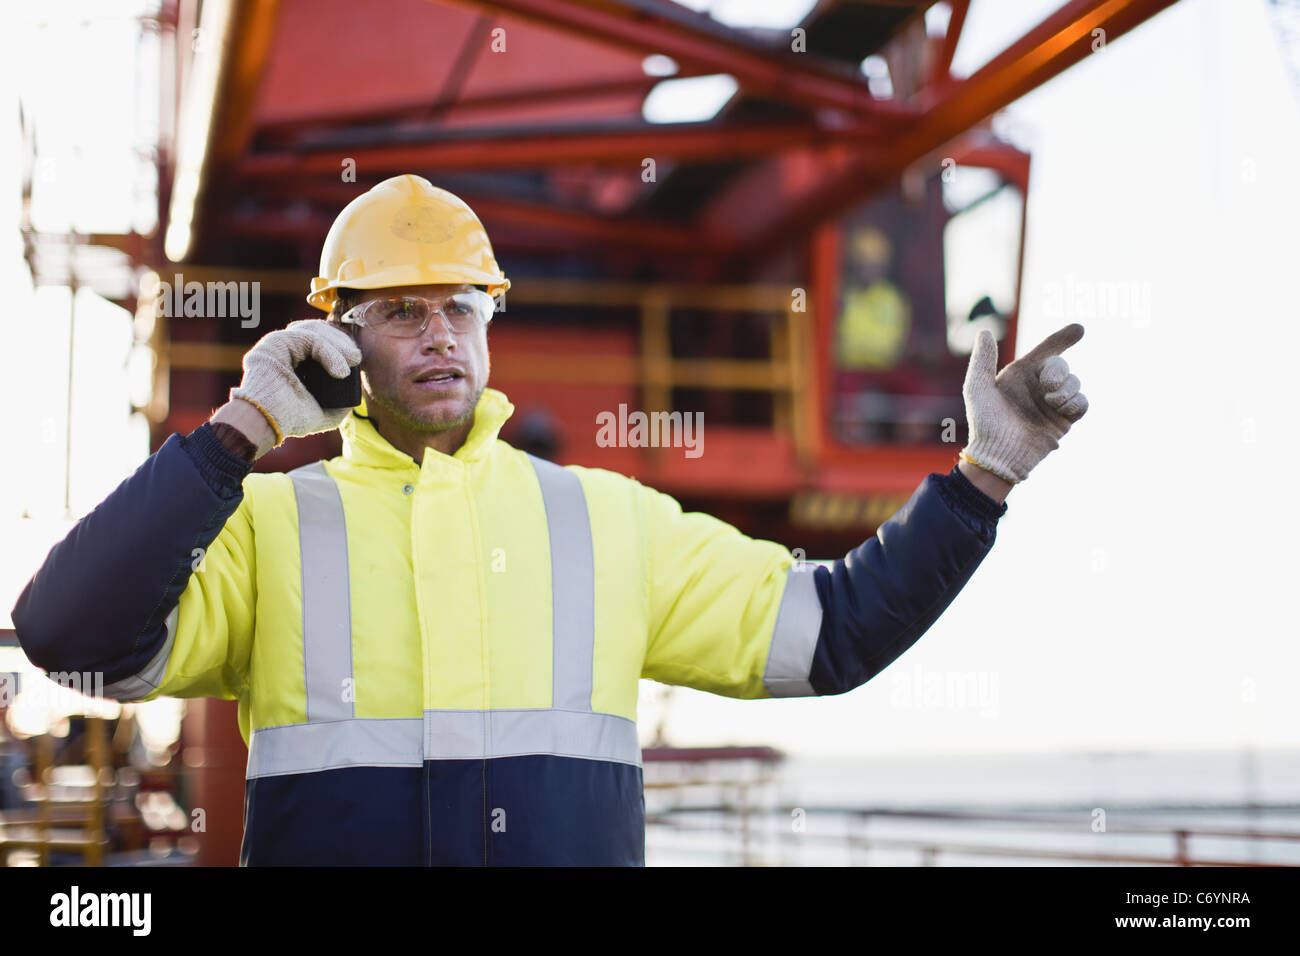 Worker using walkie talkie on oil rig Stock Photo